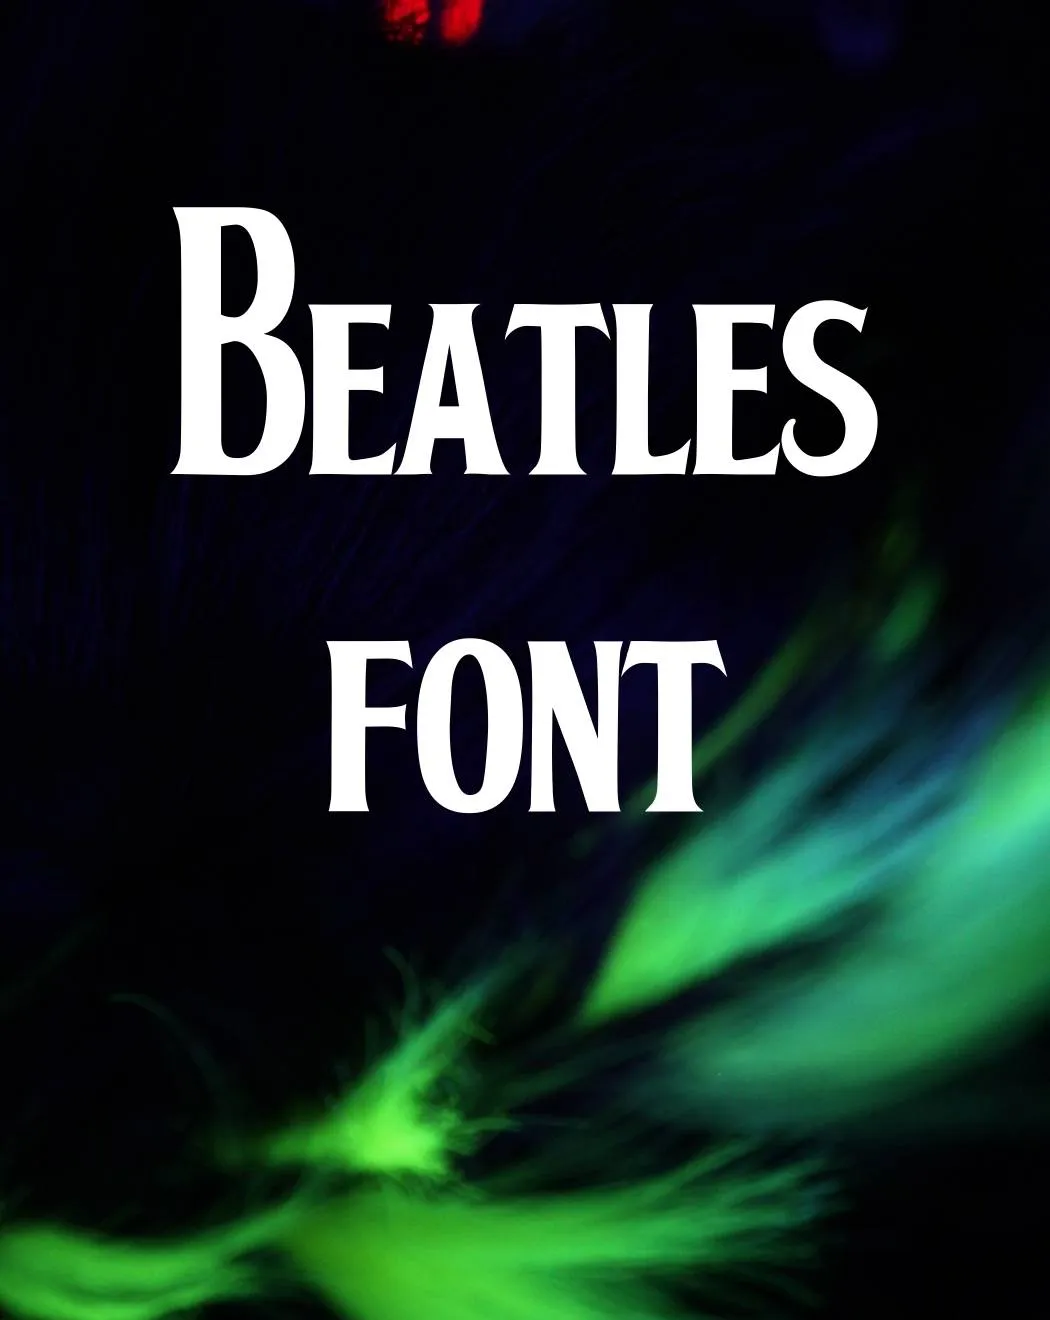 Beatles Font Free Download